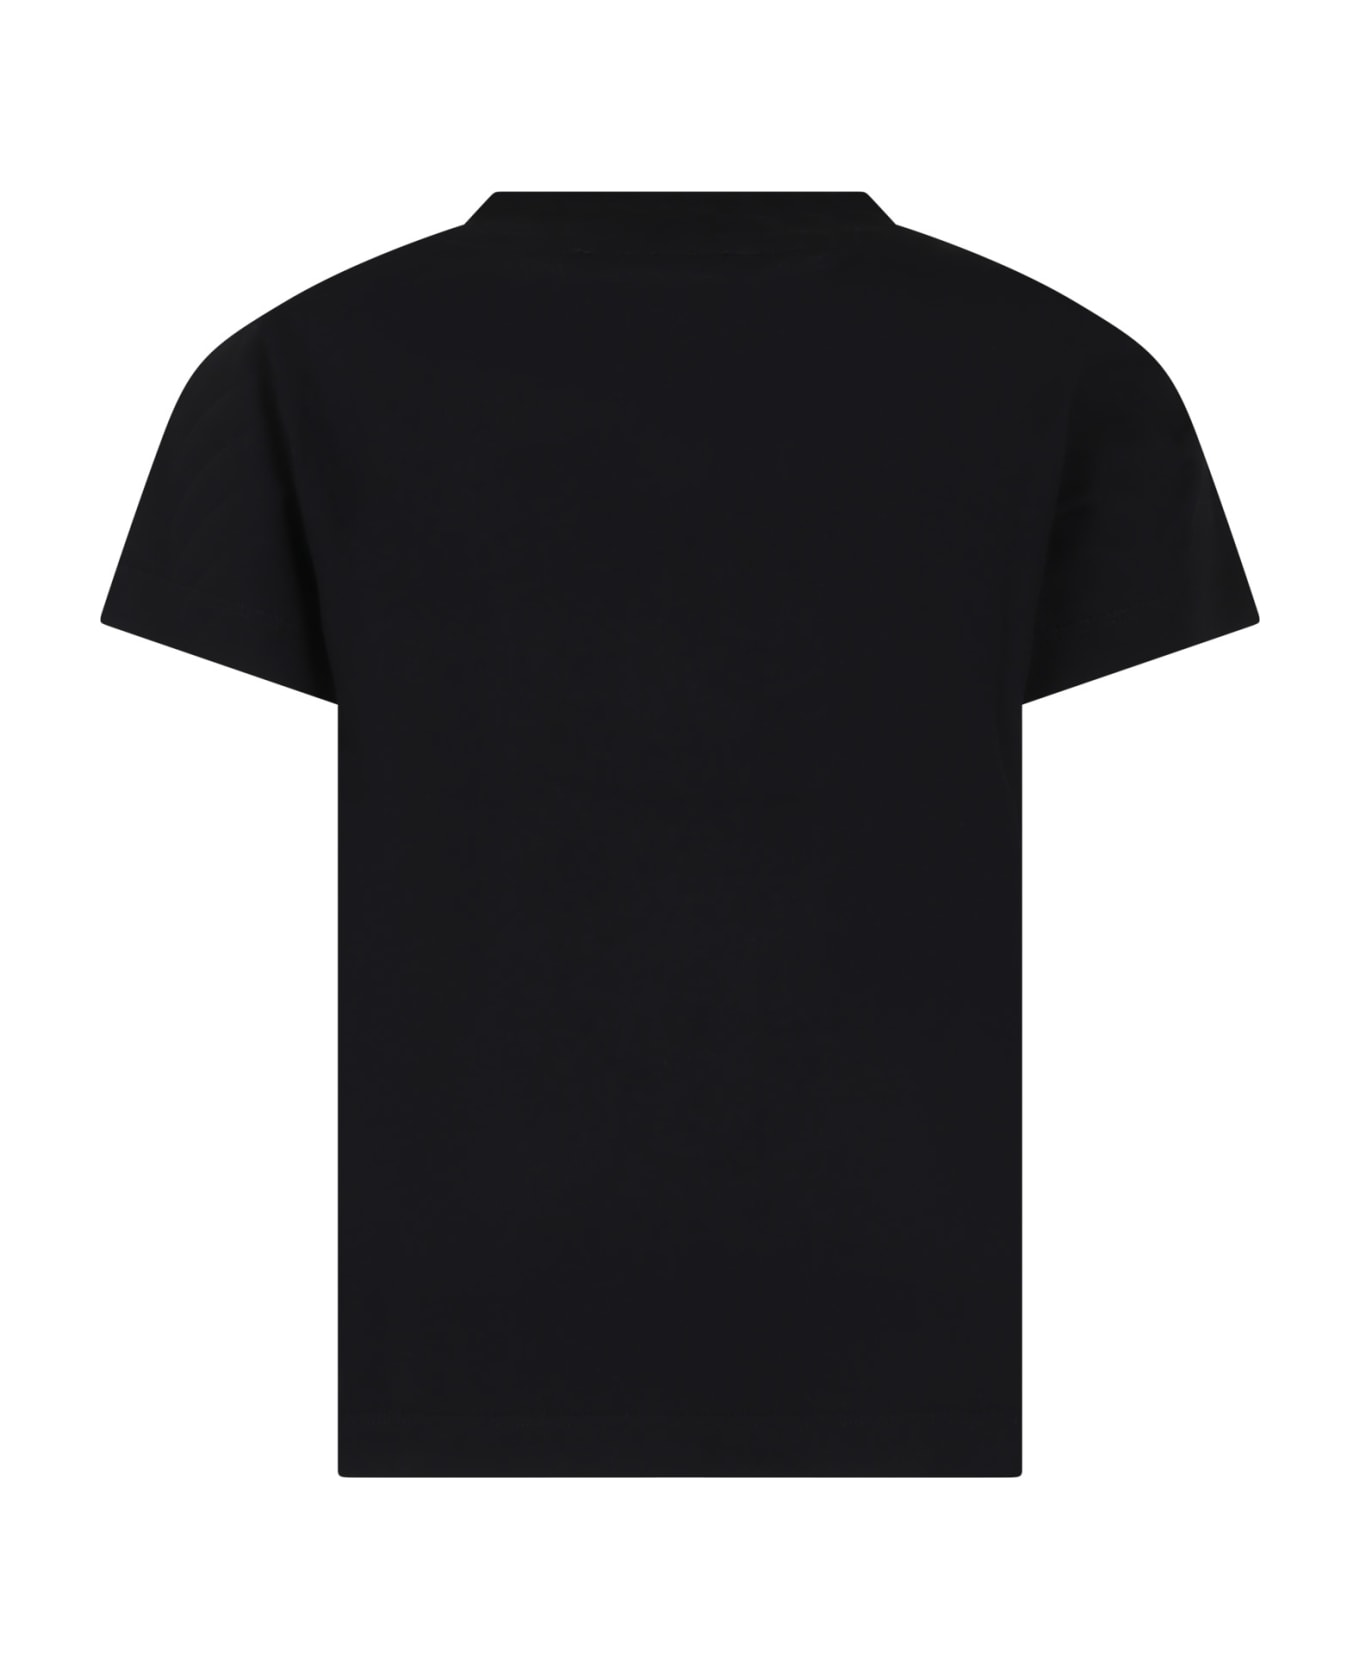 Balmain Black T-shirt For Kids With Logo - Black Tシャツ＆ポロシャツ